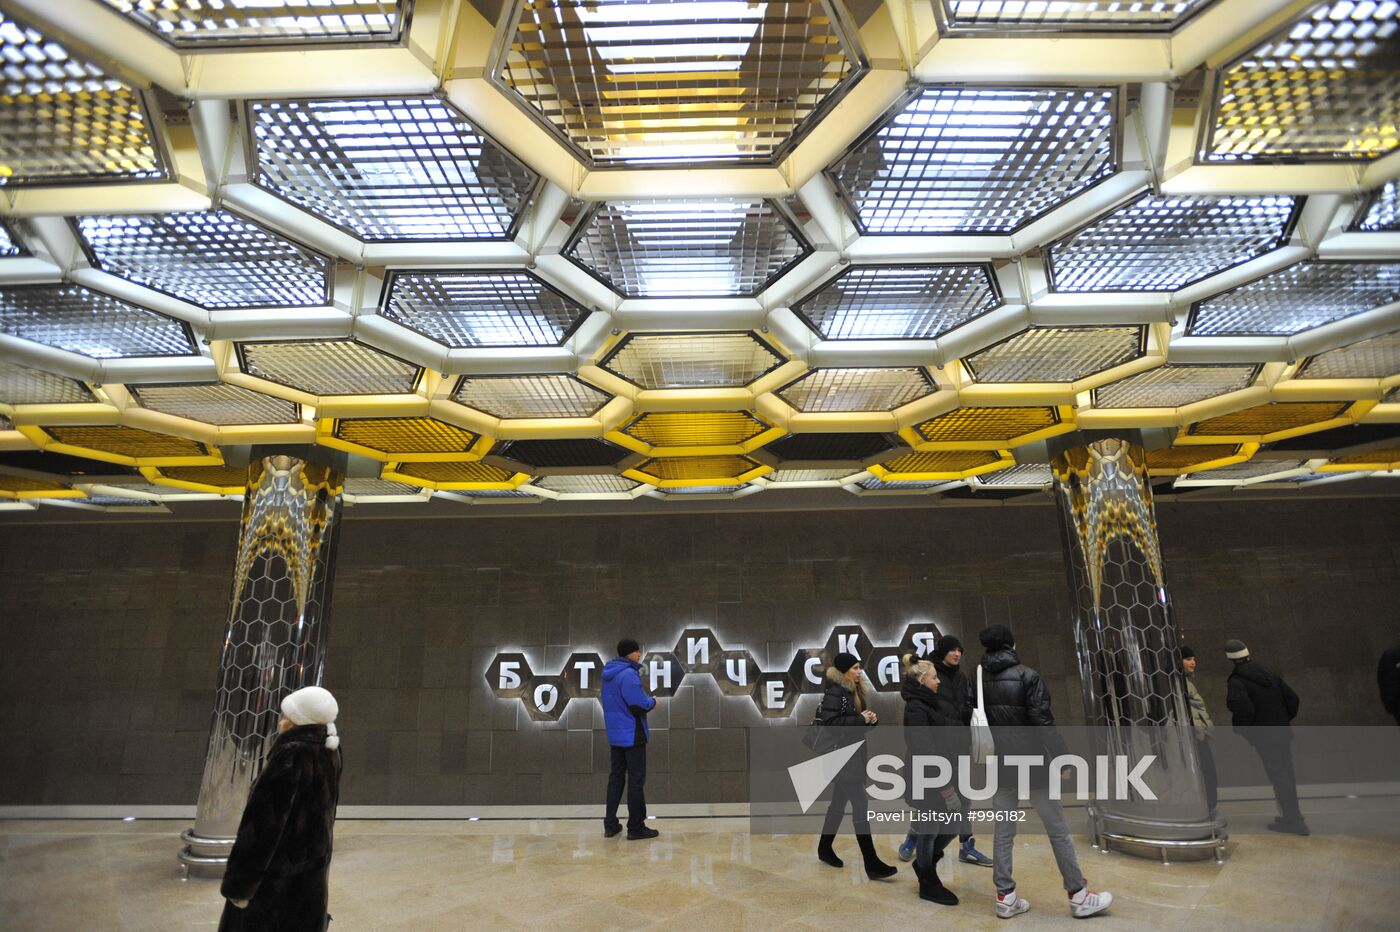 Opening of "Botanicheskaya" subway station in Yekaterinburg